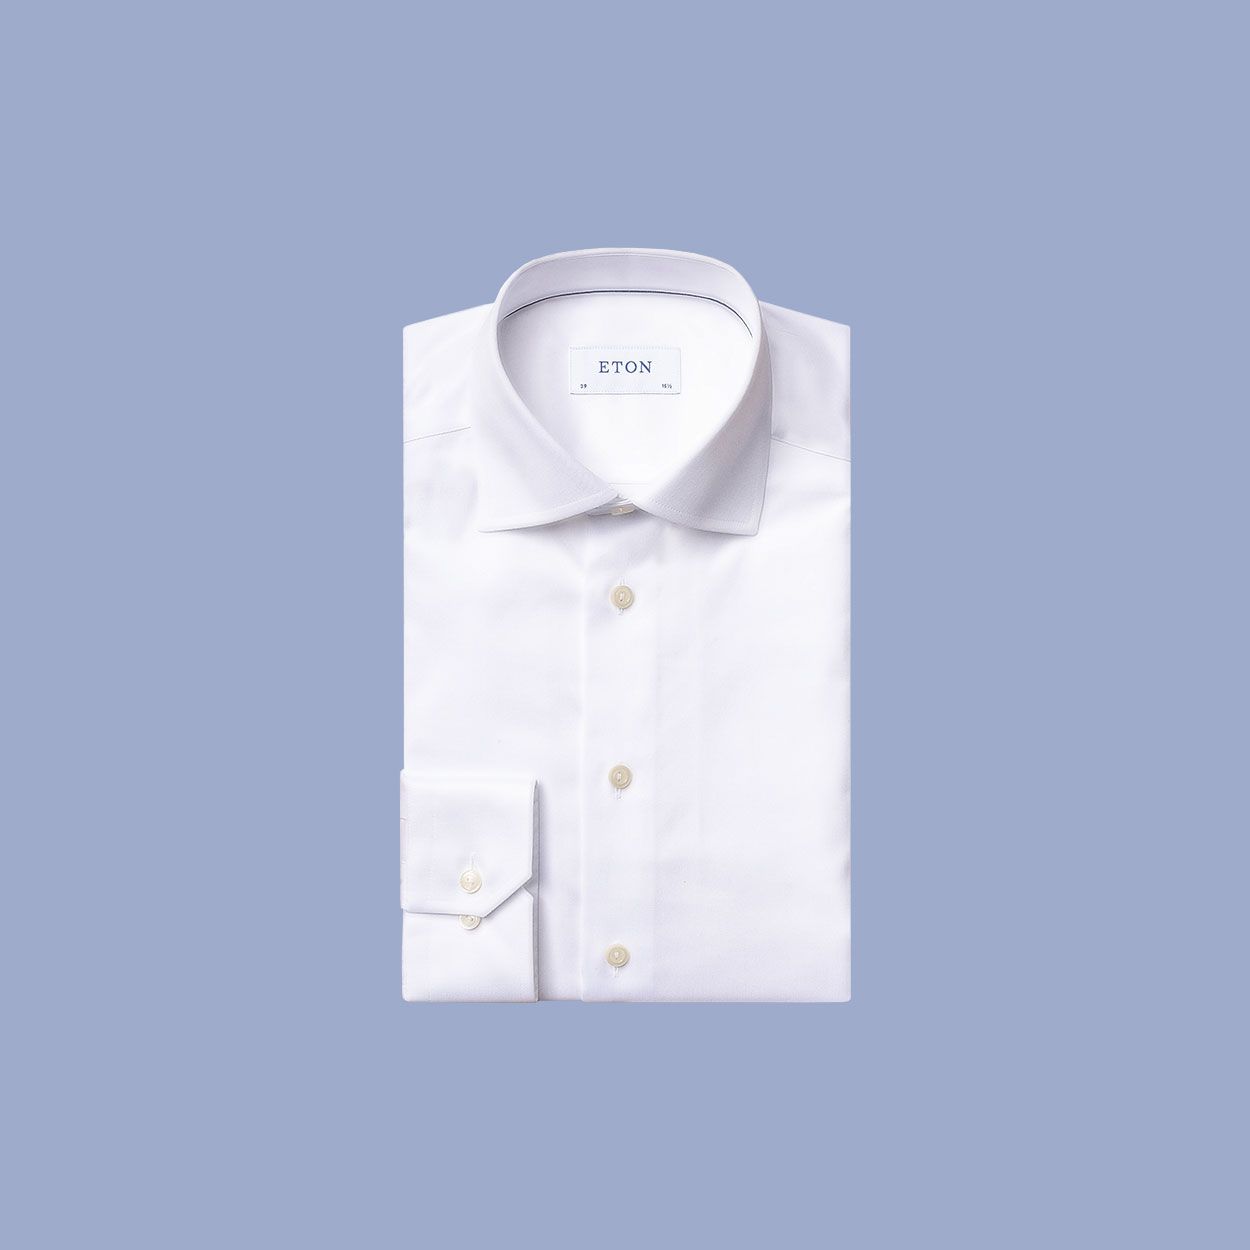 The White Shirt – The Shirt